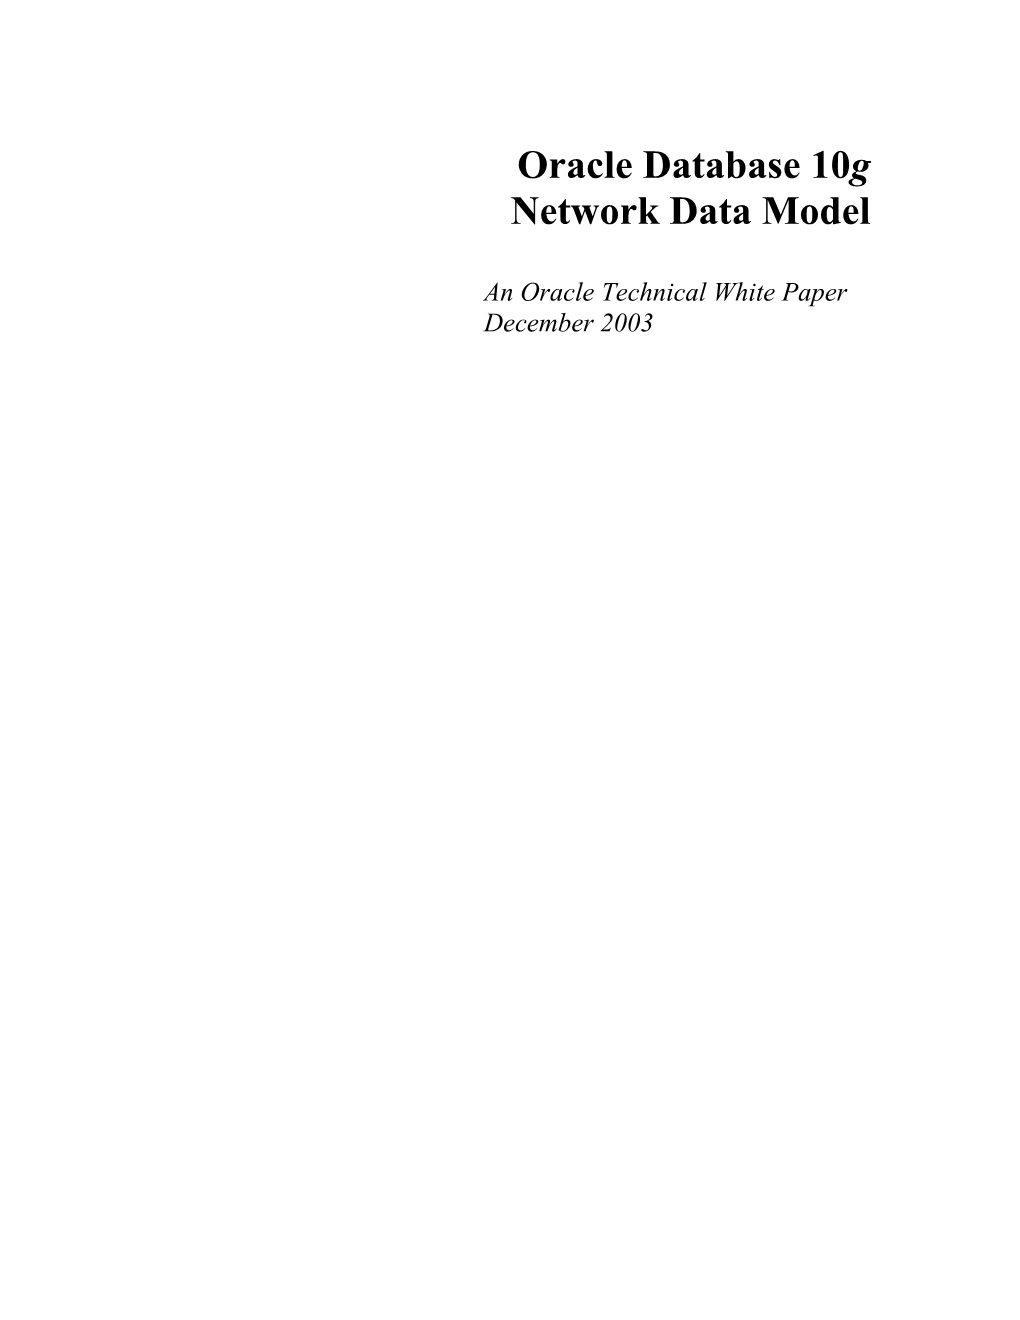 Oracle Database 10G Network Data Model